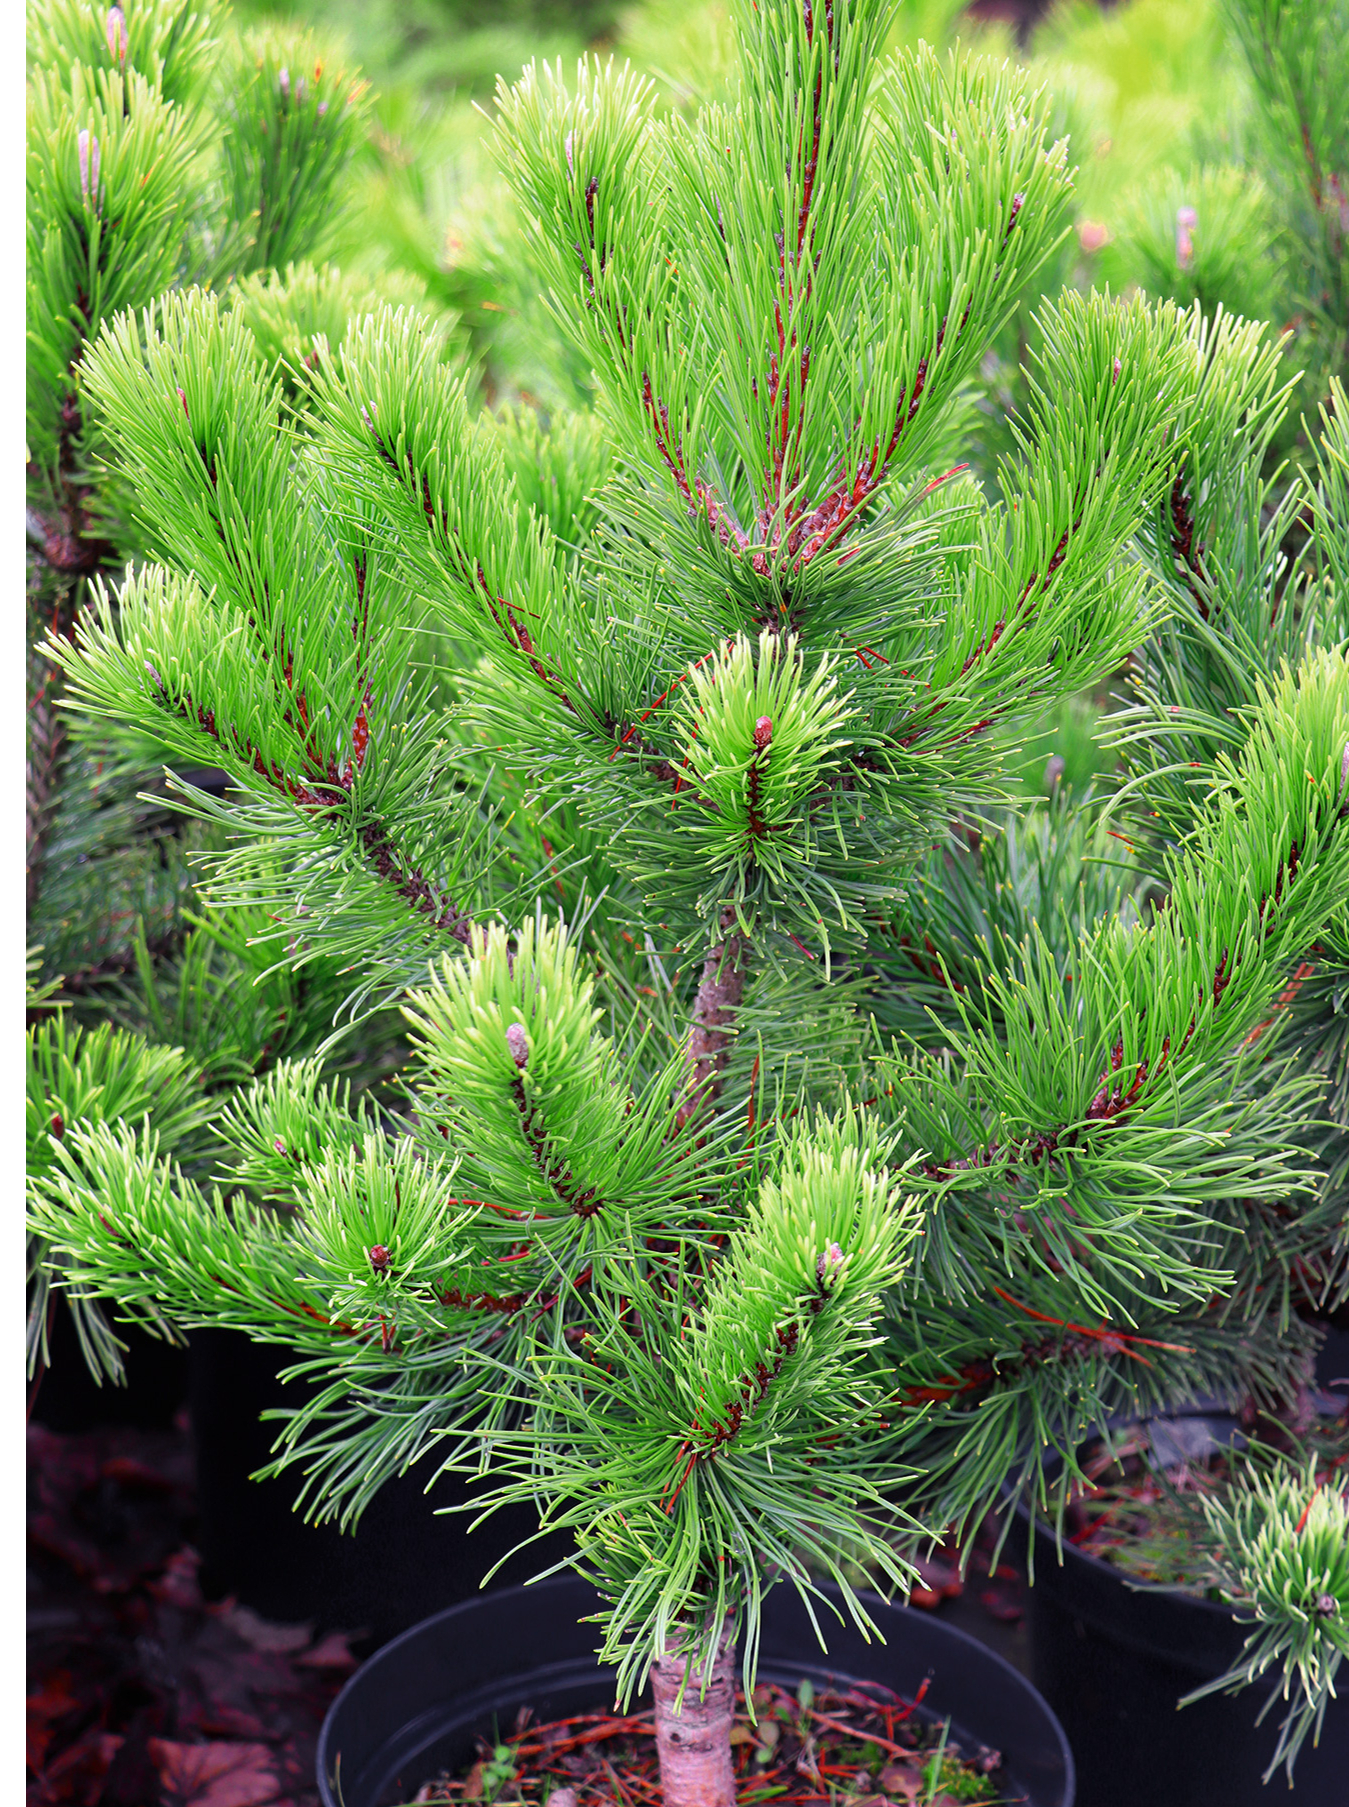 2. Kalnu priede (Pinus mugo) ‘Pal Maleter’